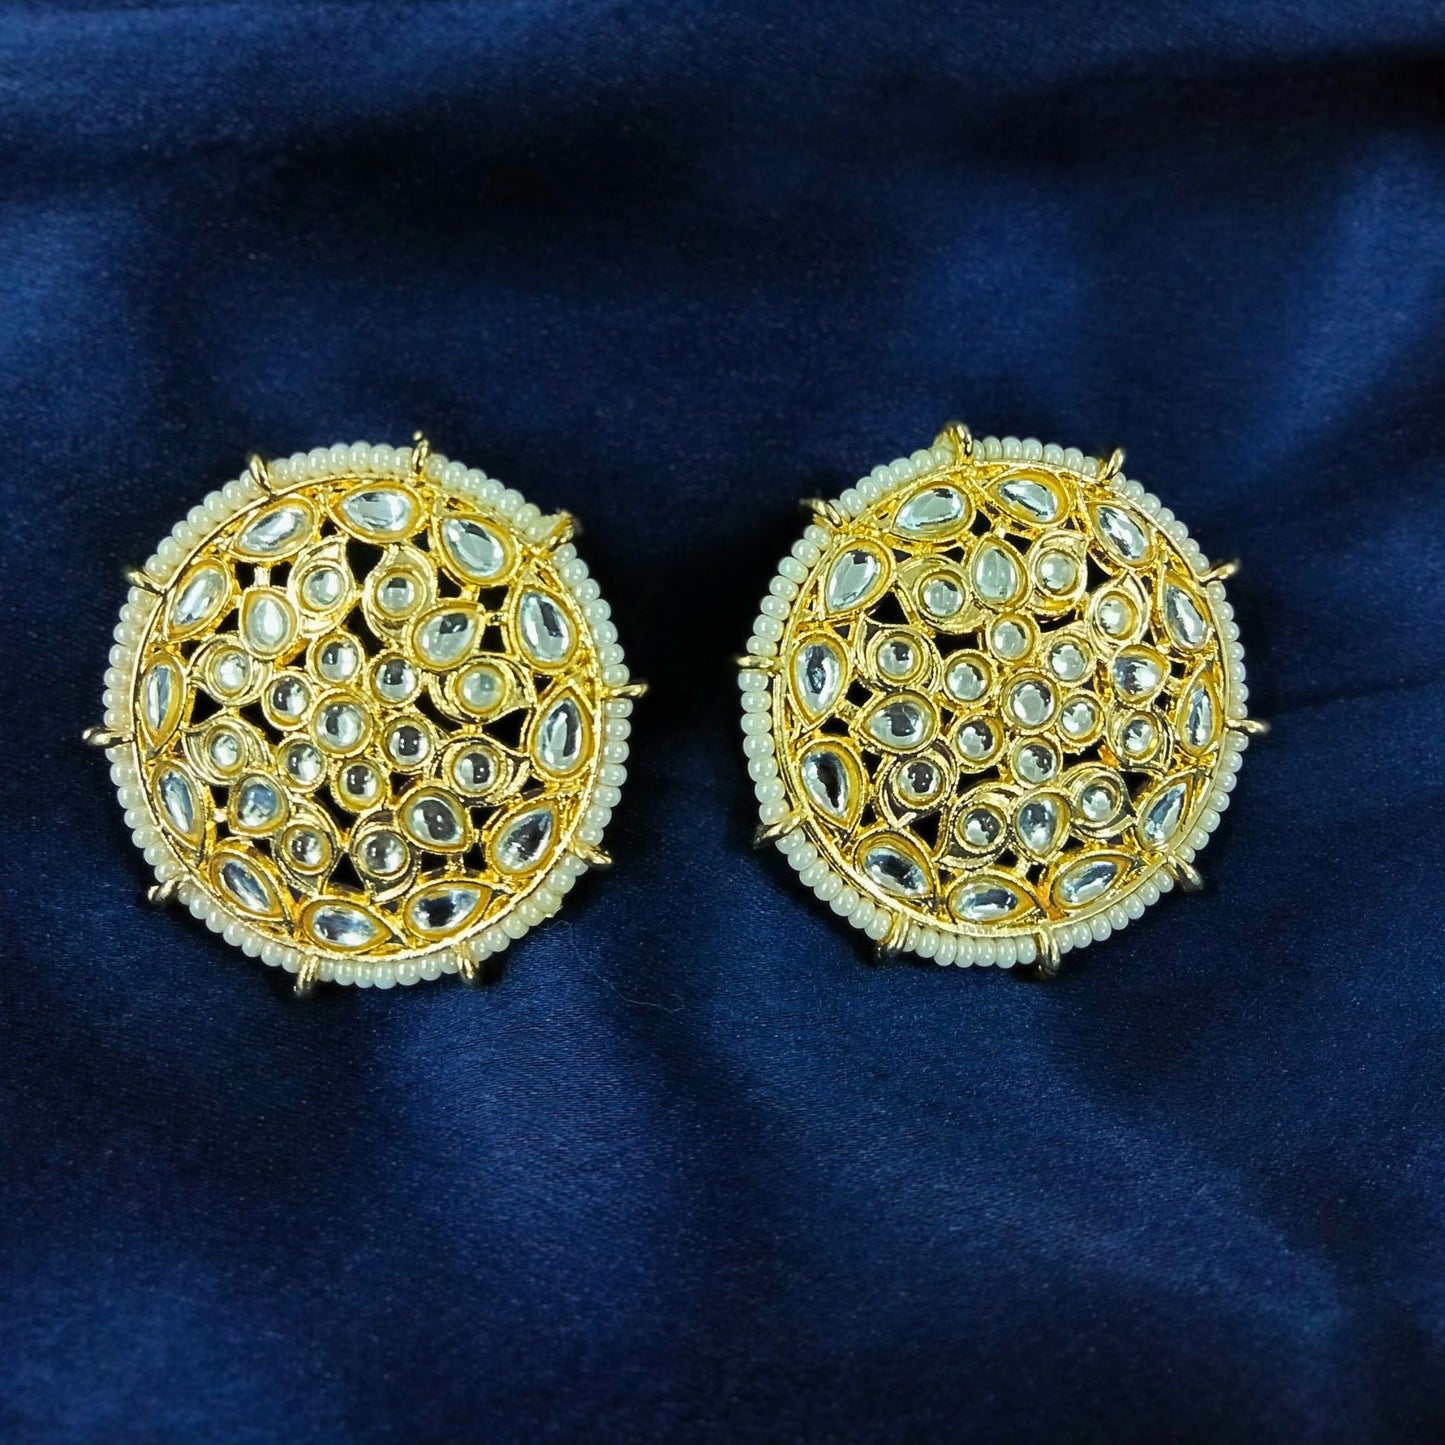 Bdiva 18K Gold Plated Intricated Design Kundan Stud Earrings.